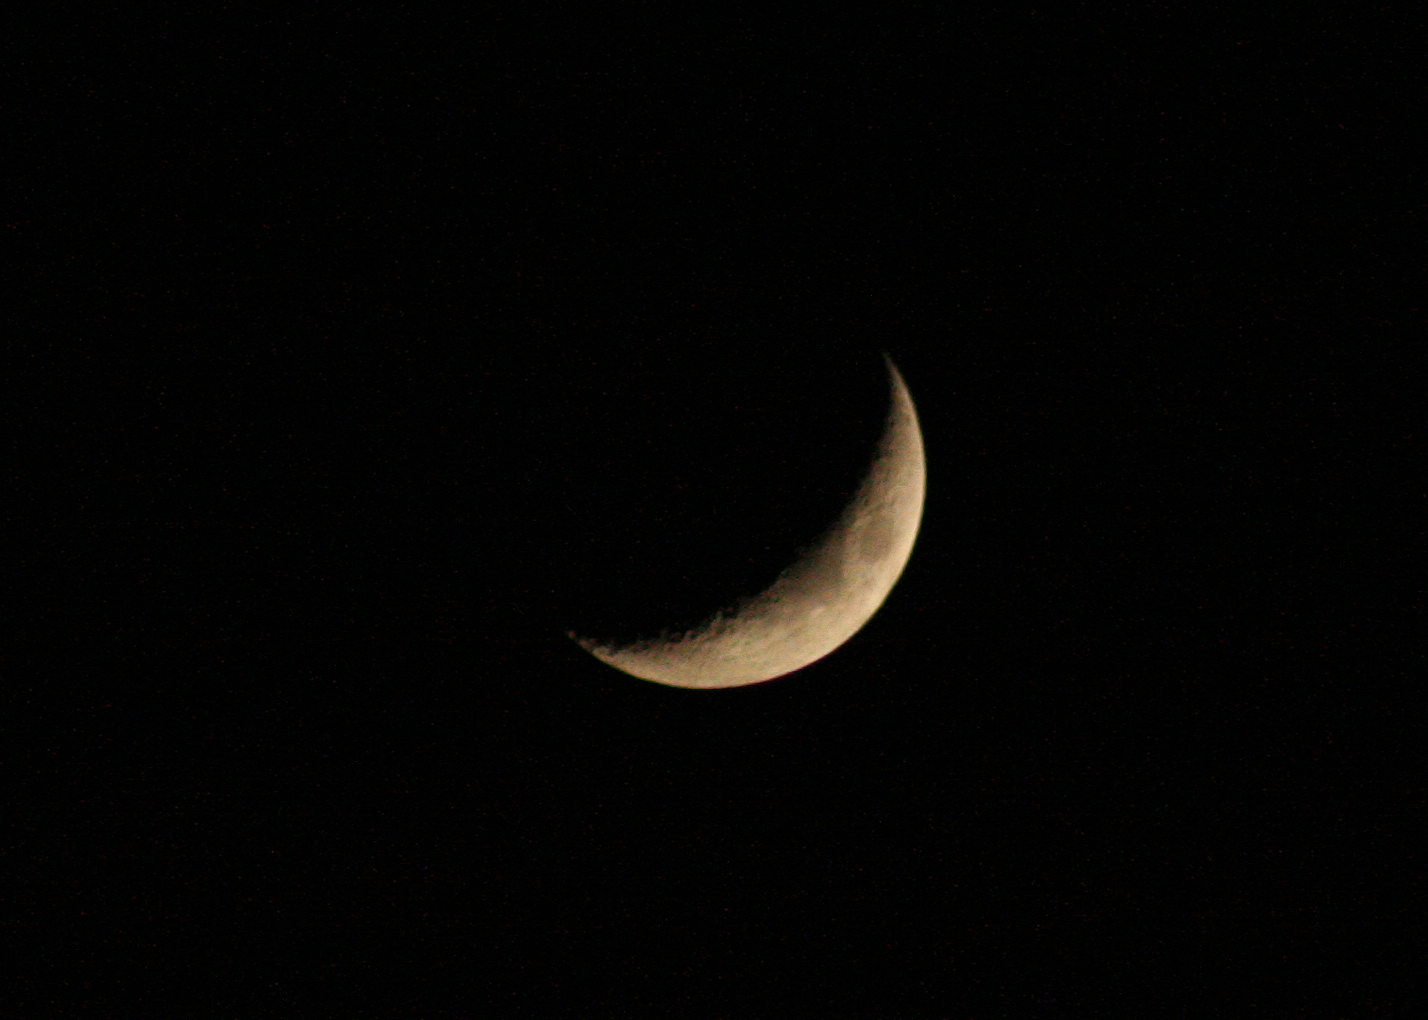 Stellar Neophyte Astronomy Blog: Last night's banana moon